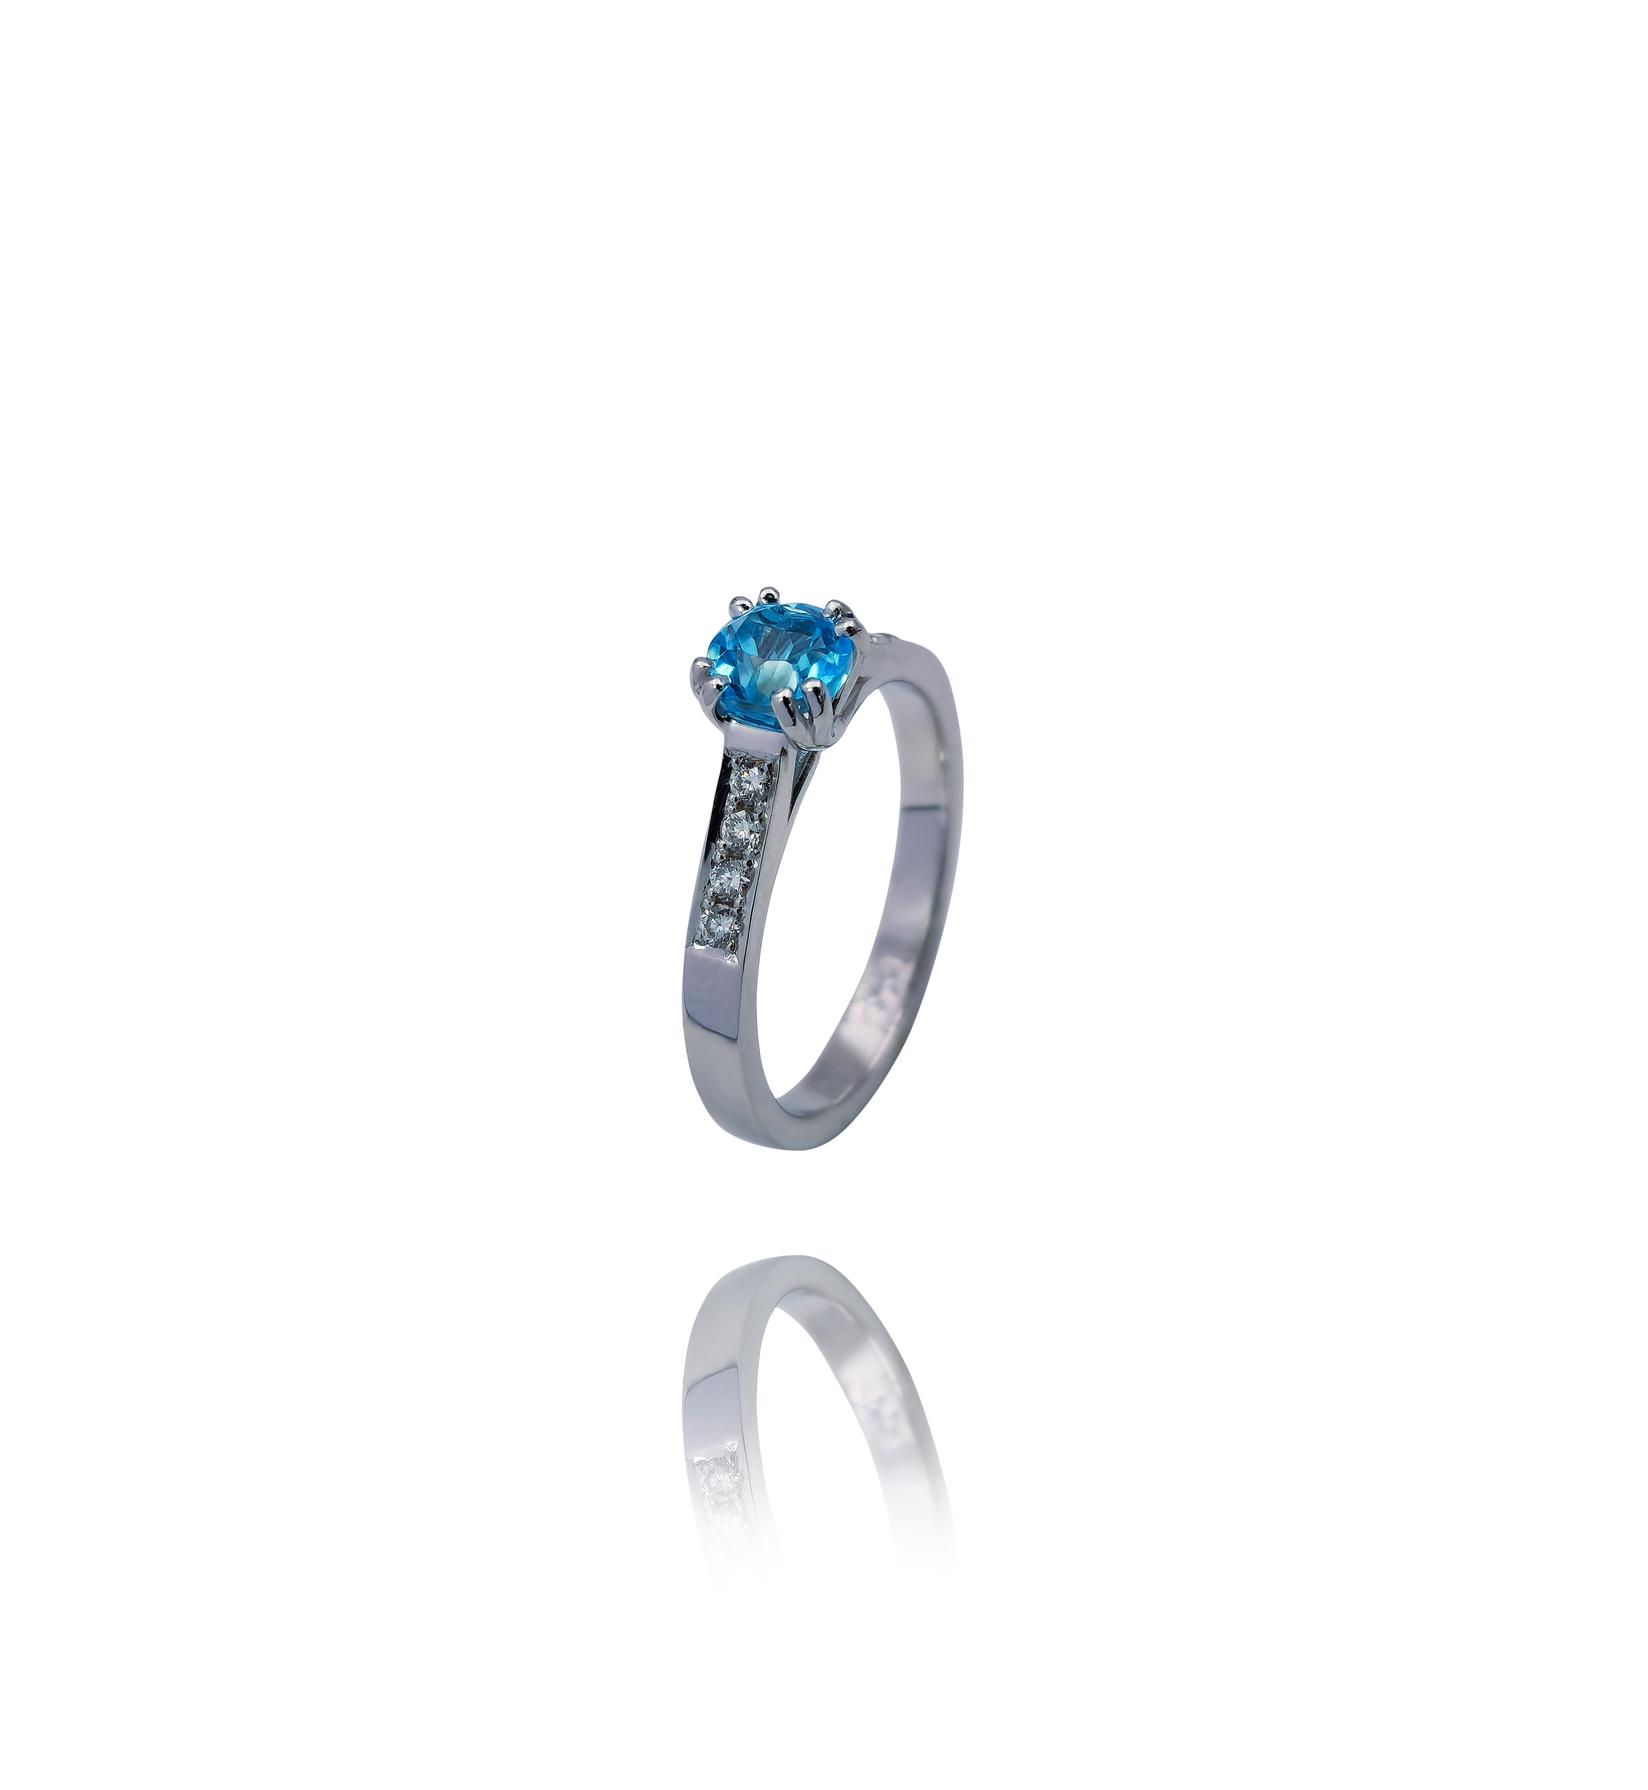 Selected image for Ženski prsten od Belog zlata sa Brilijantima i Swiss blue topazom, 585, 20mm